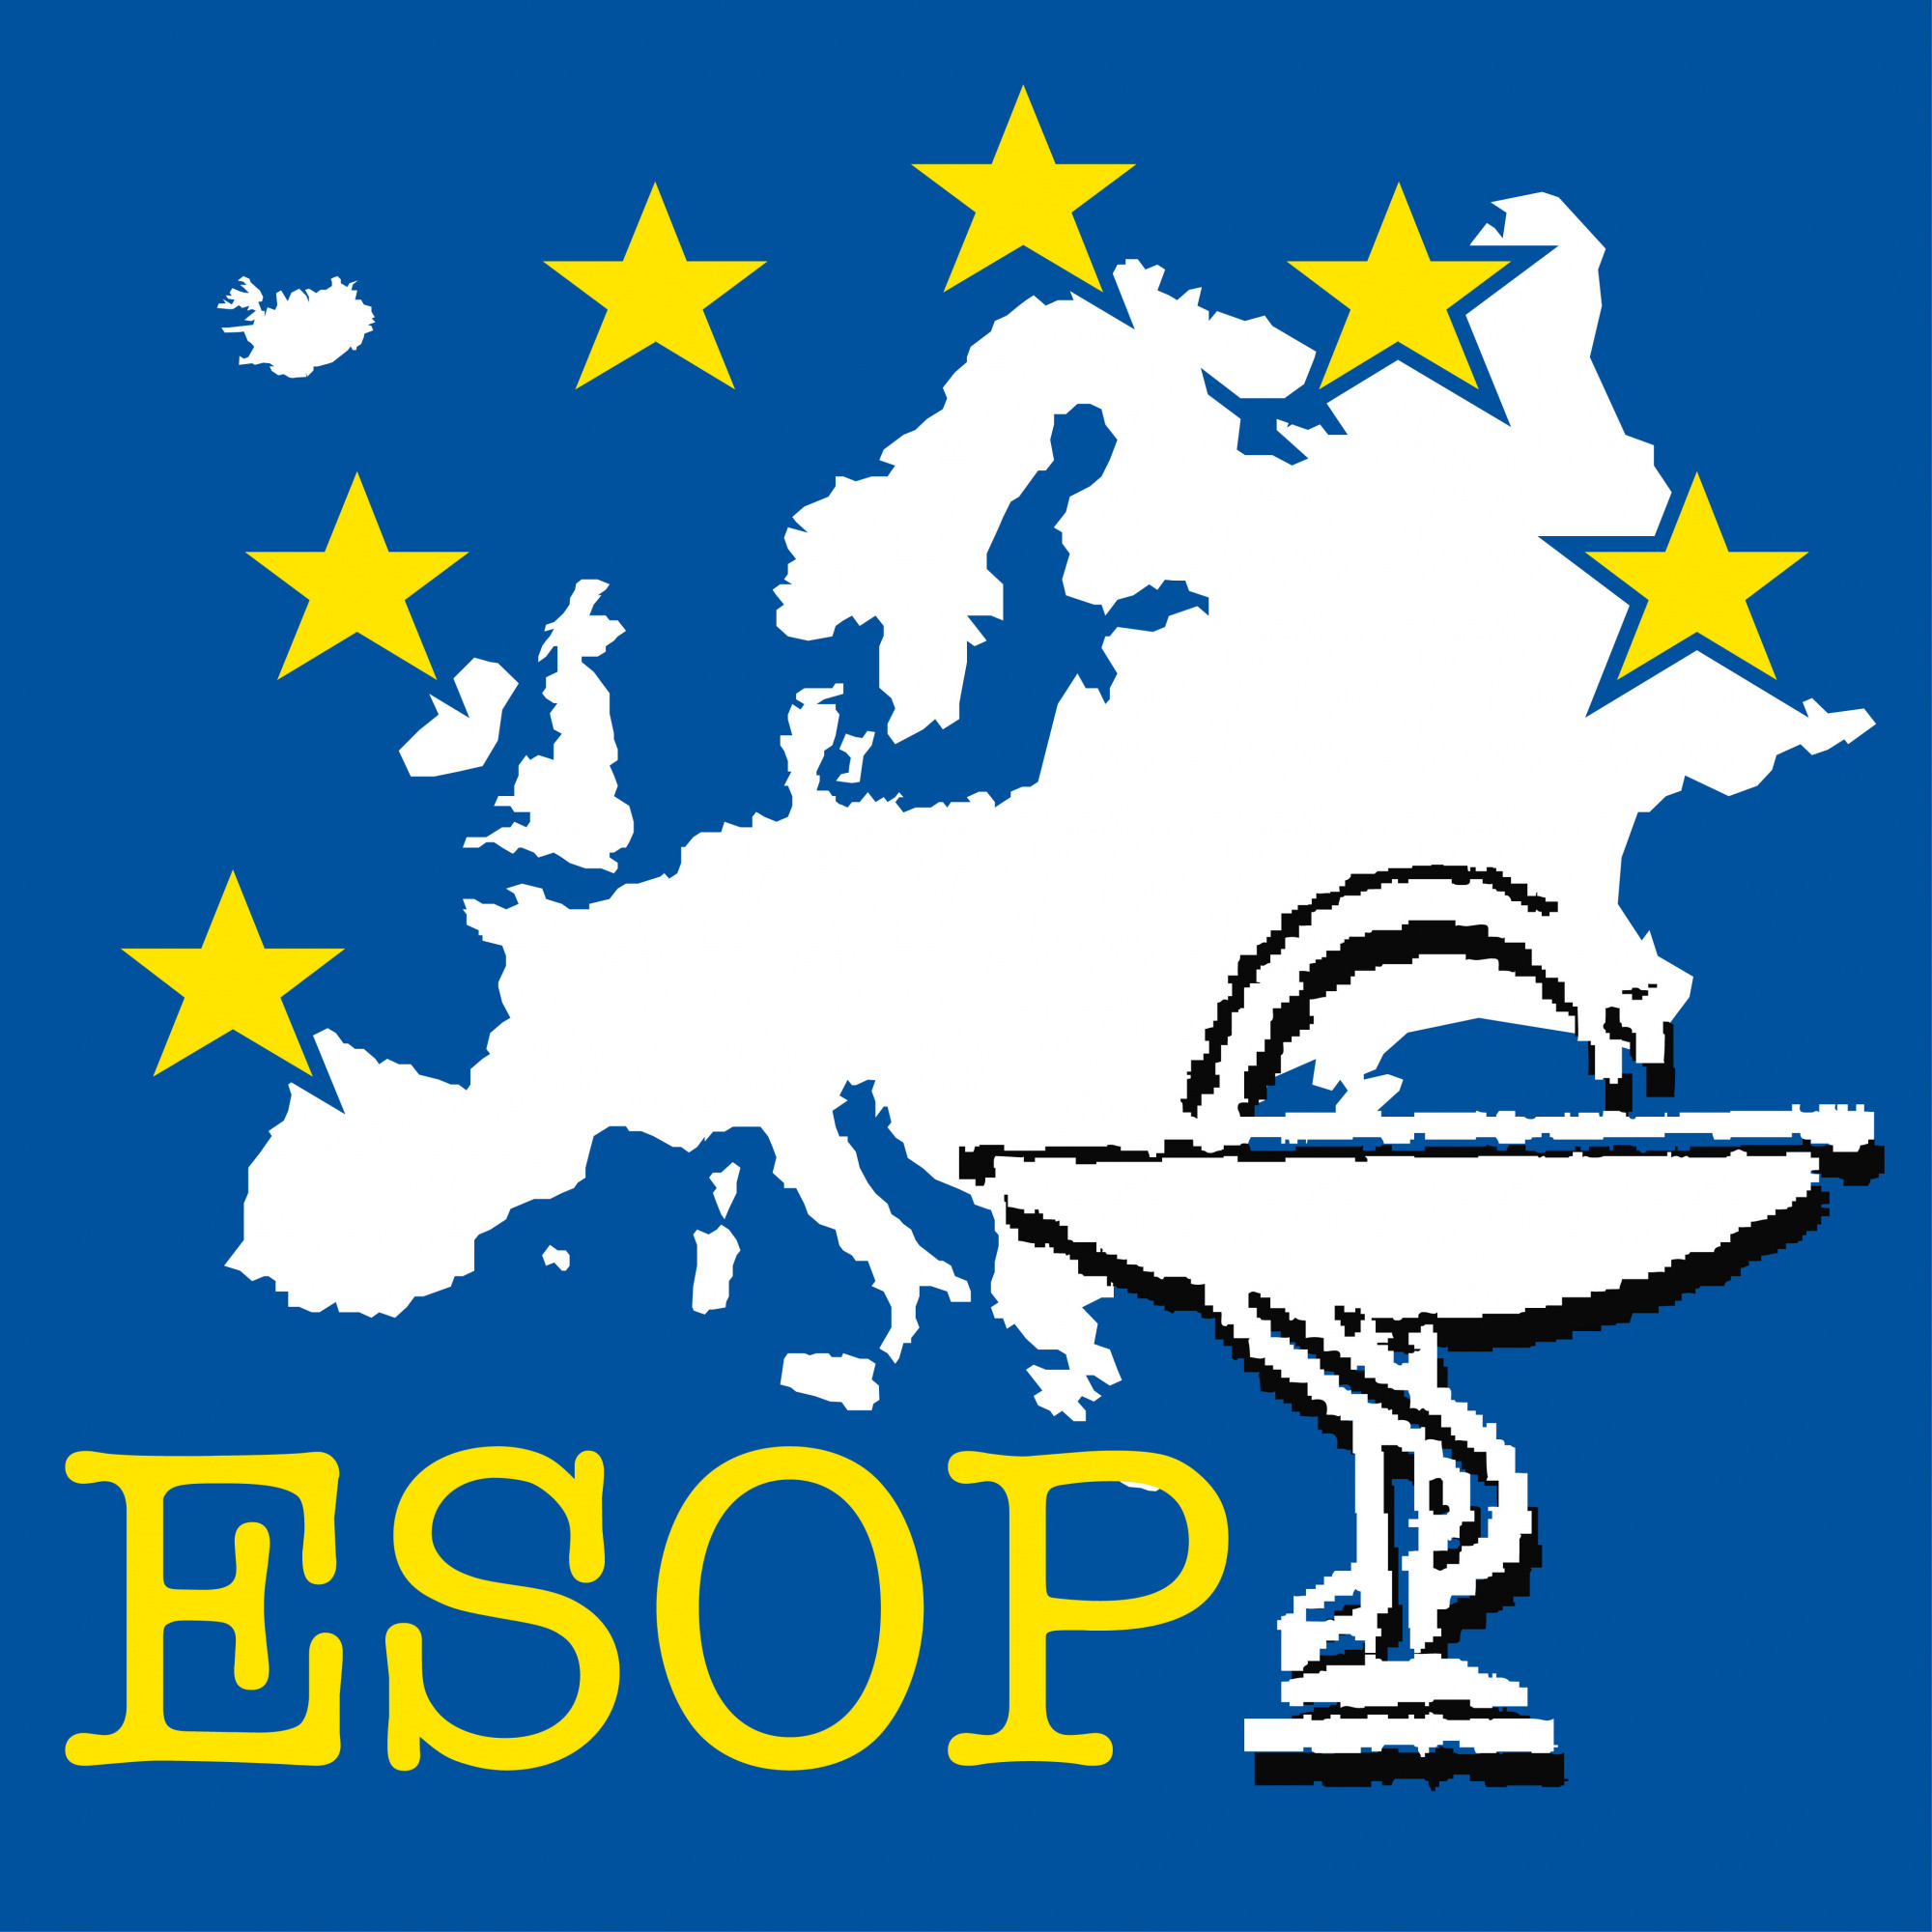 European Society of Oncology Pharmacy